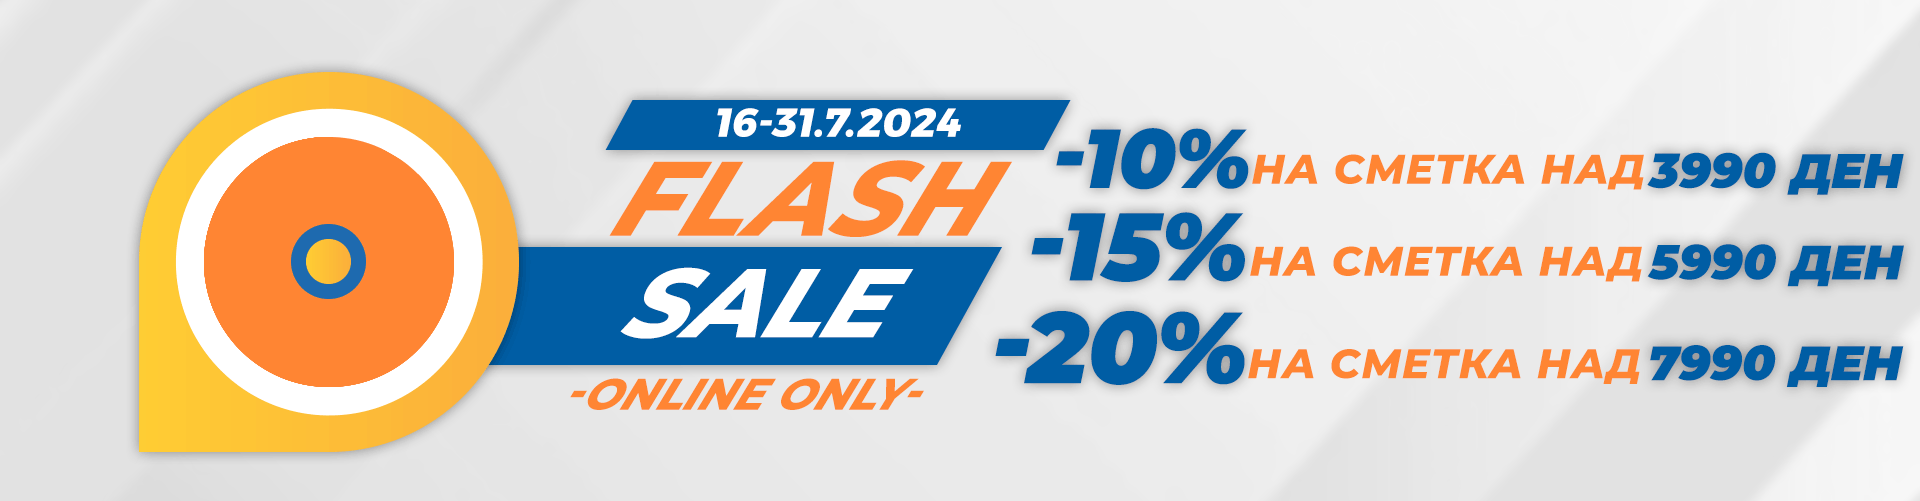 Flash sale 